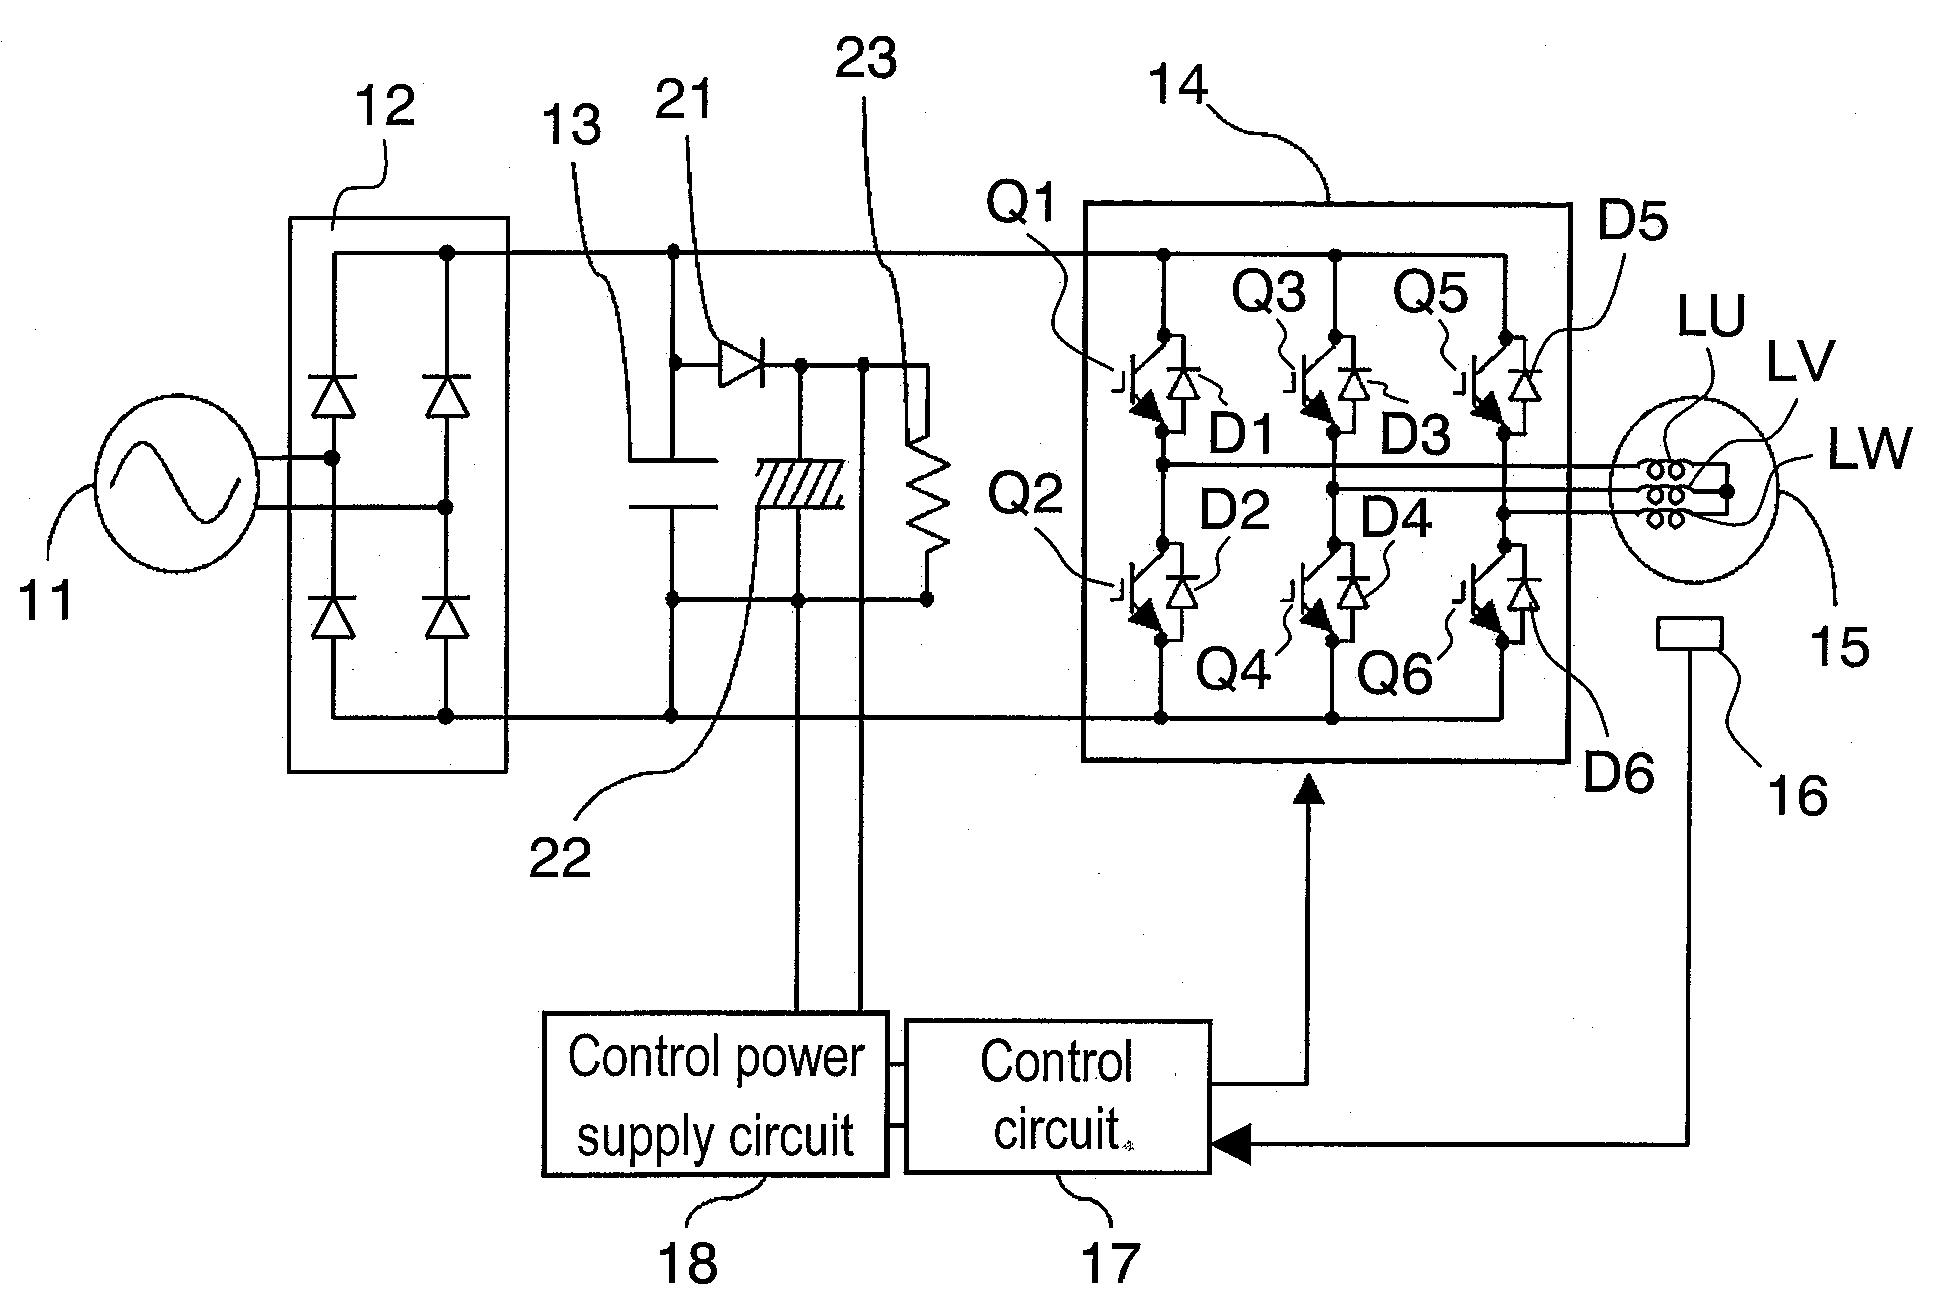 Motor frive inverter control apparatus